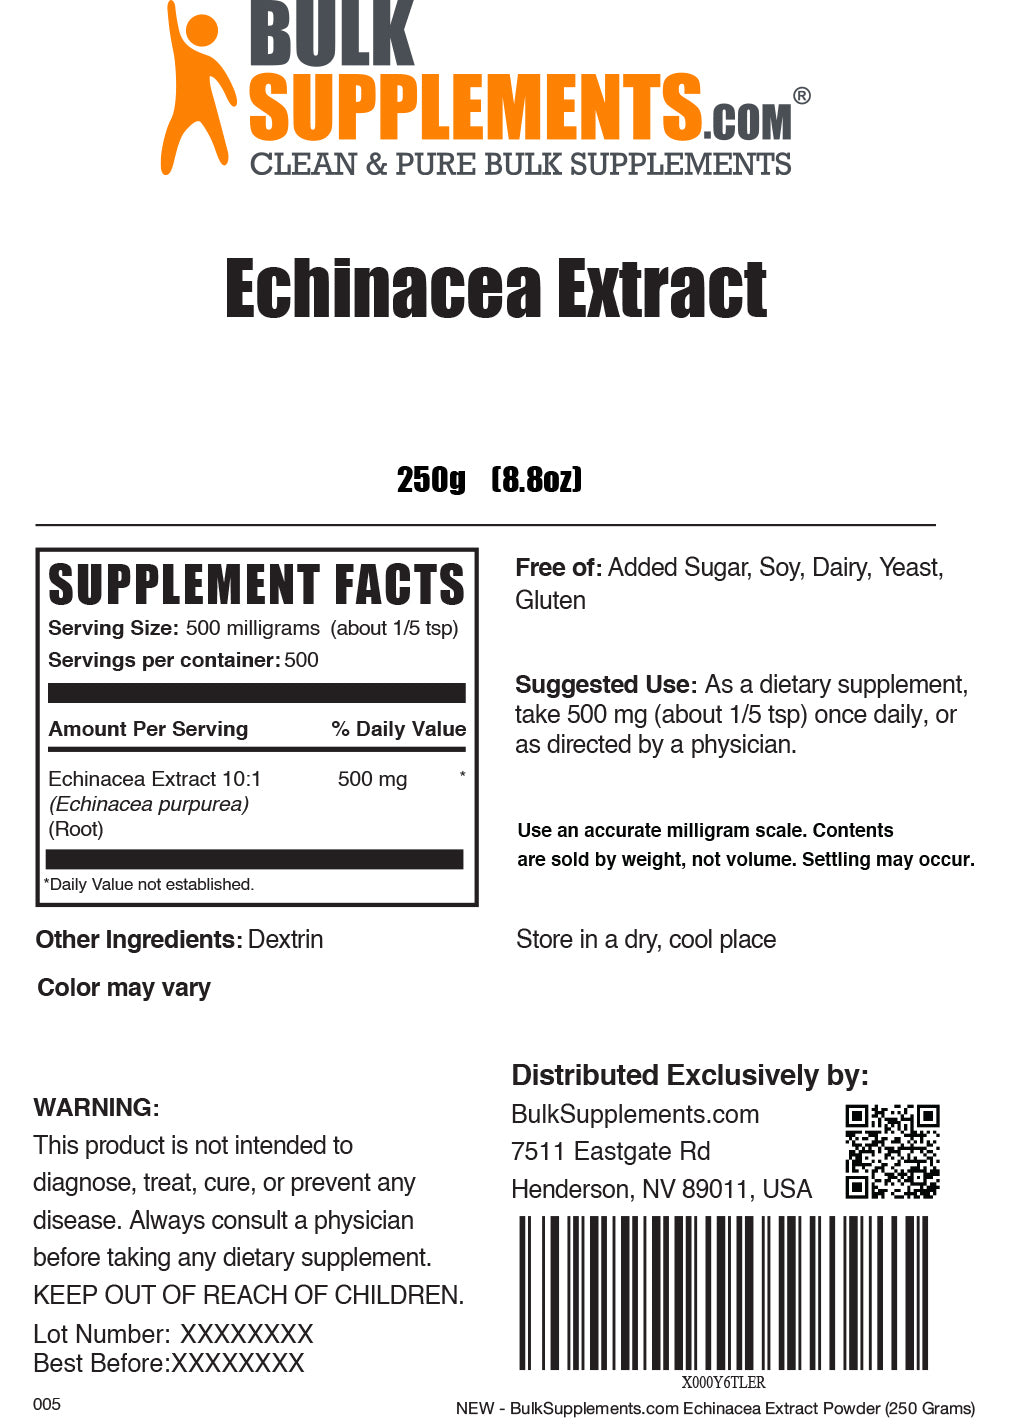 Echinacea Extract powder label 250g